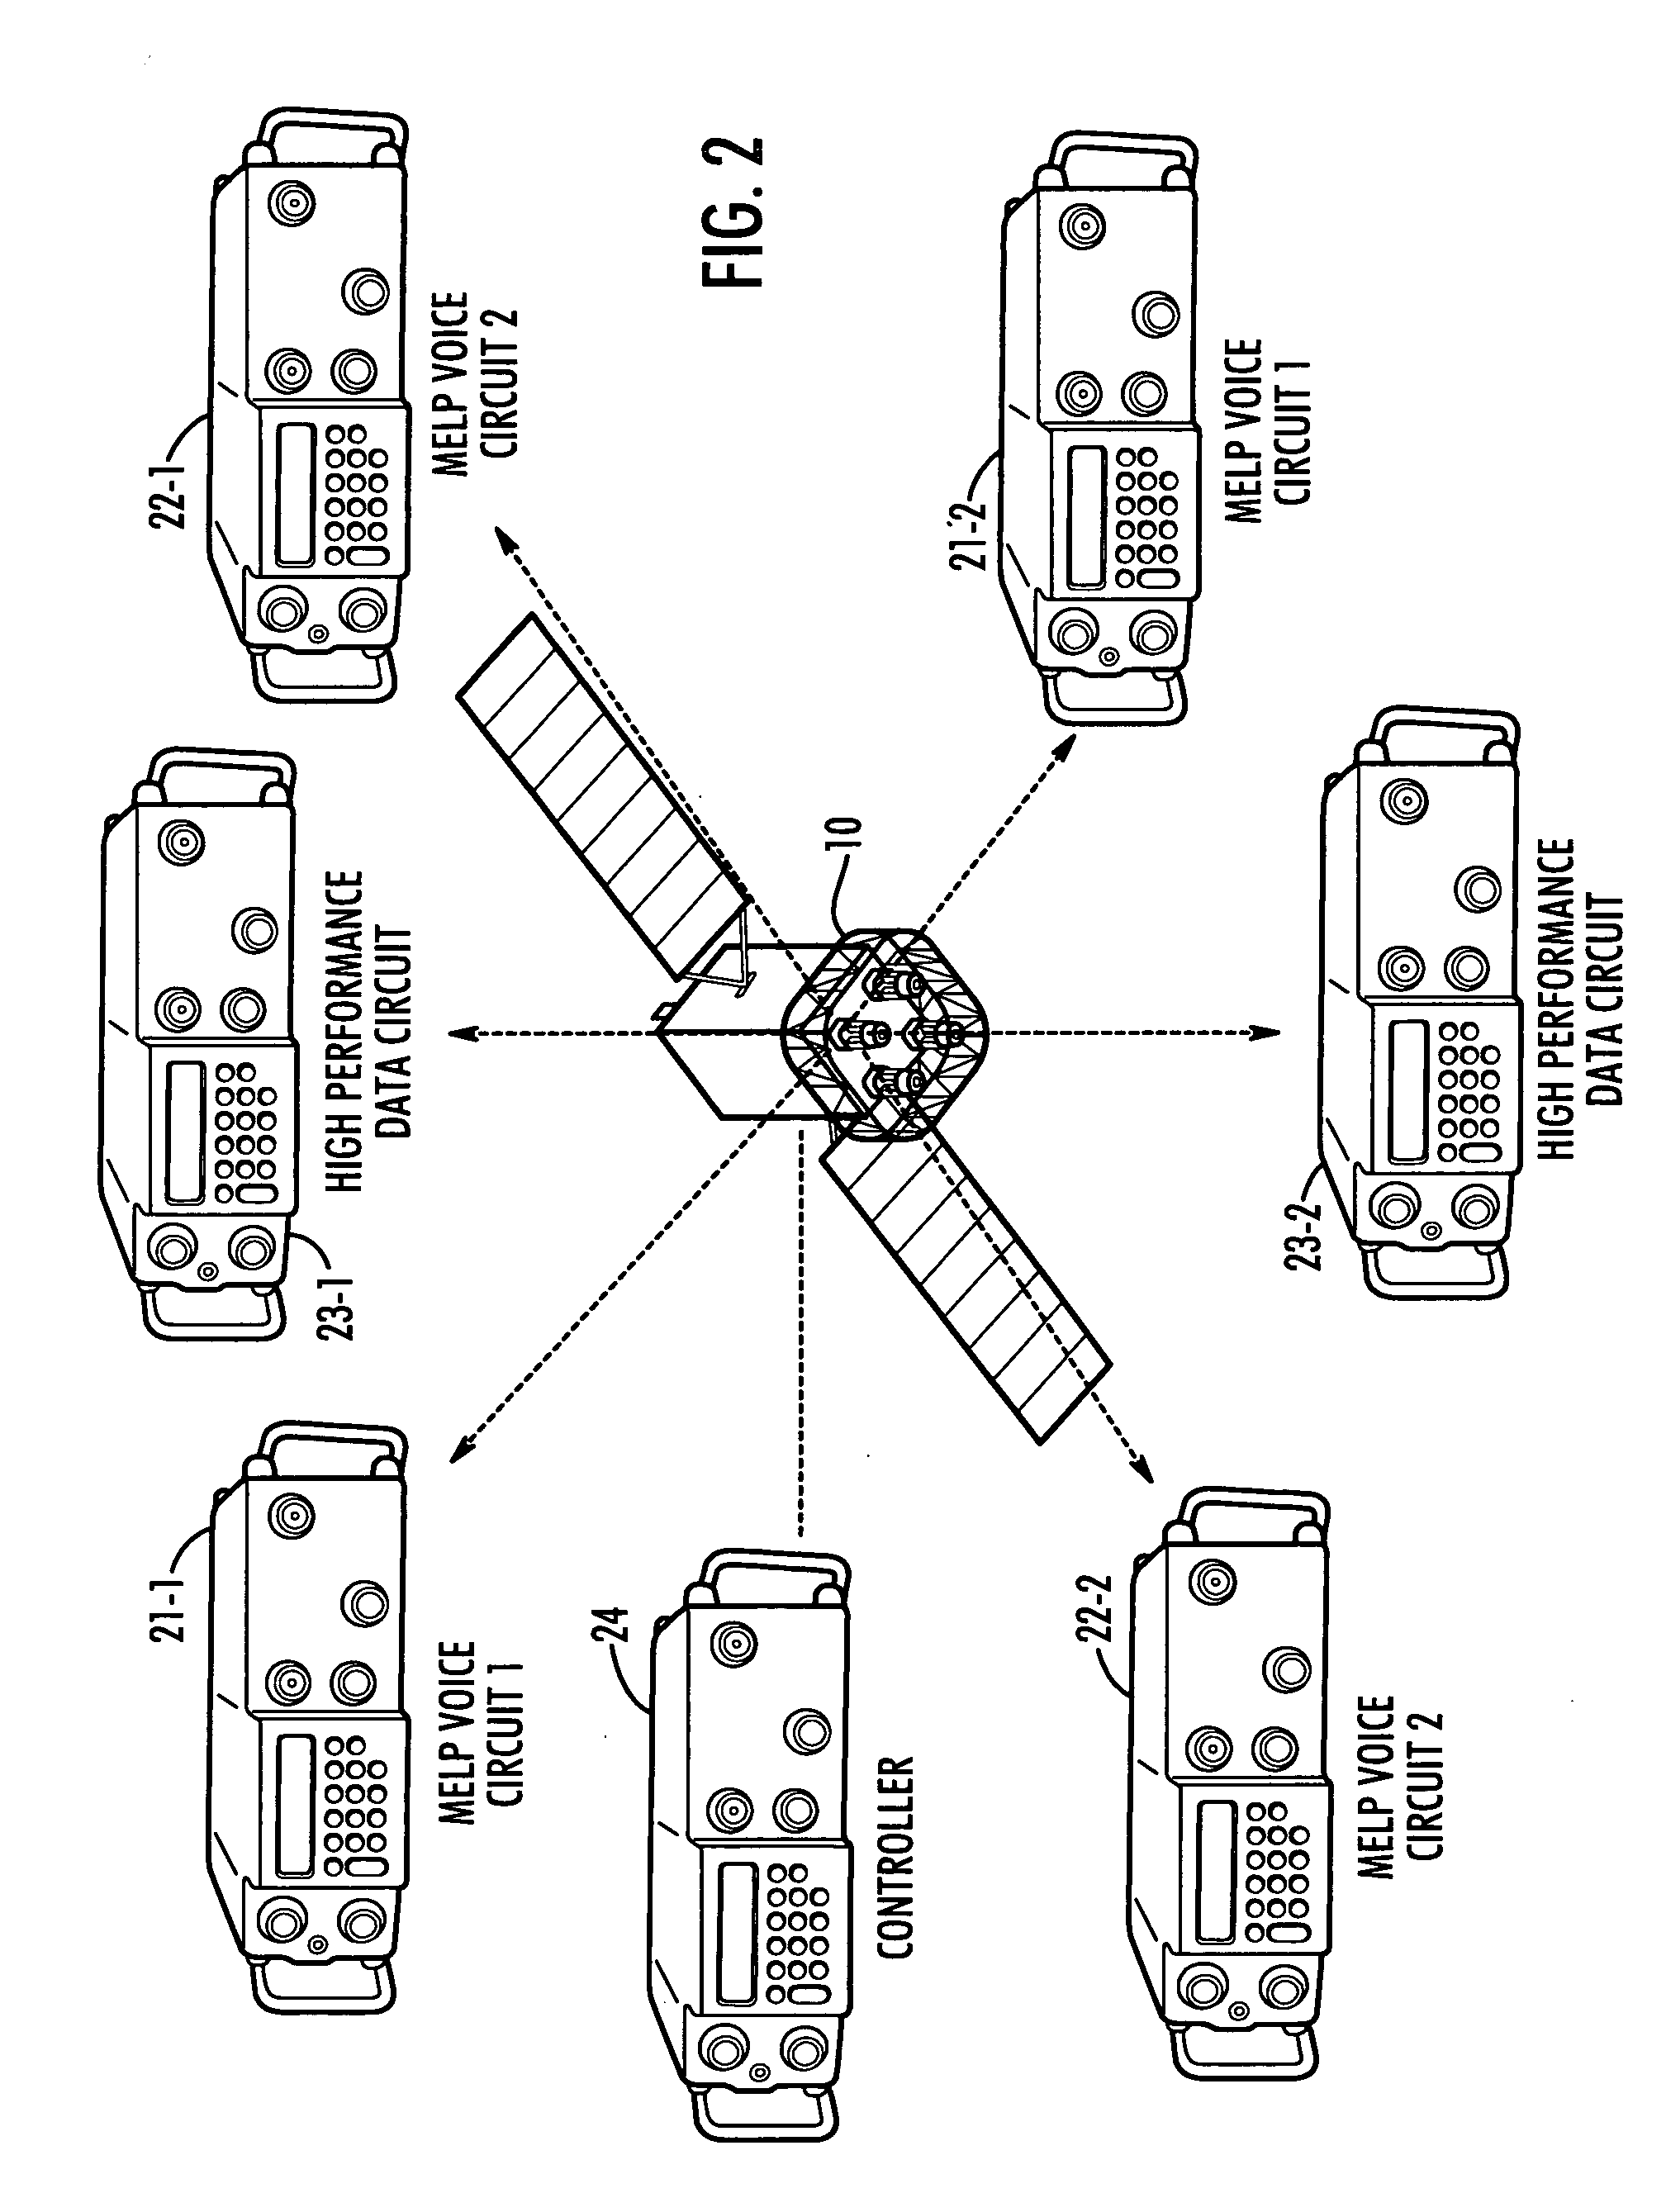 Timeslot Assignment Mechanism For Satellite Communication Network